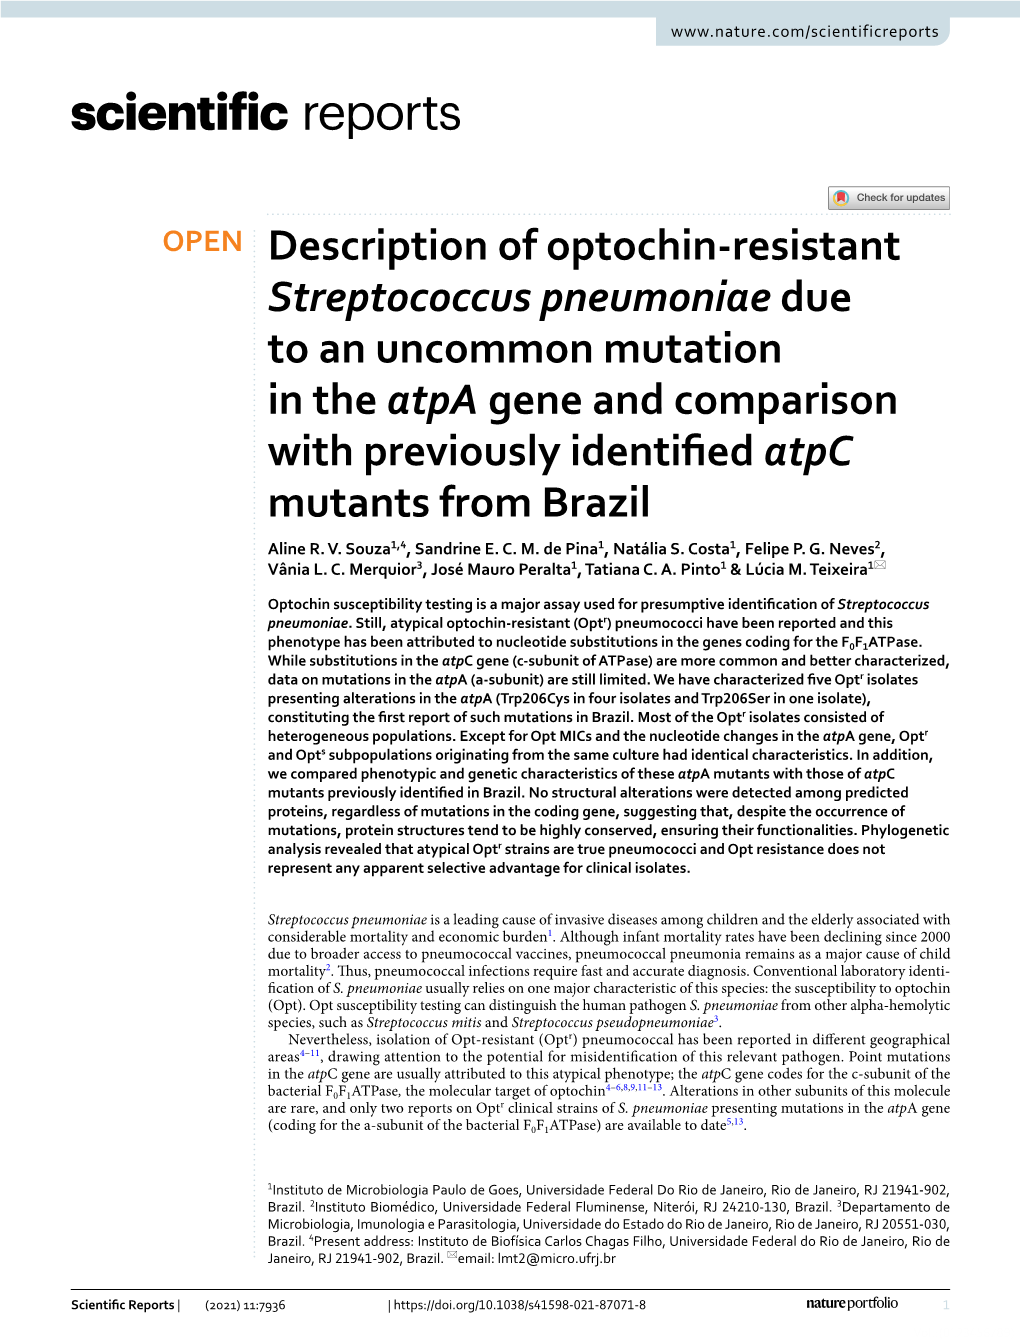 Description of Optochin-Resistant Streptococcus Pneumoniae Due To